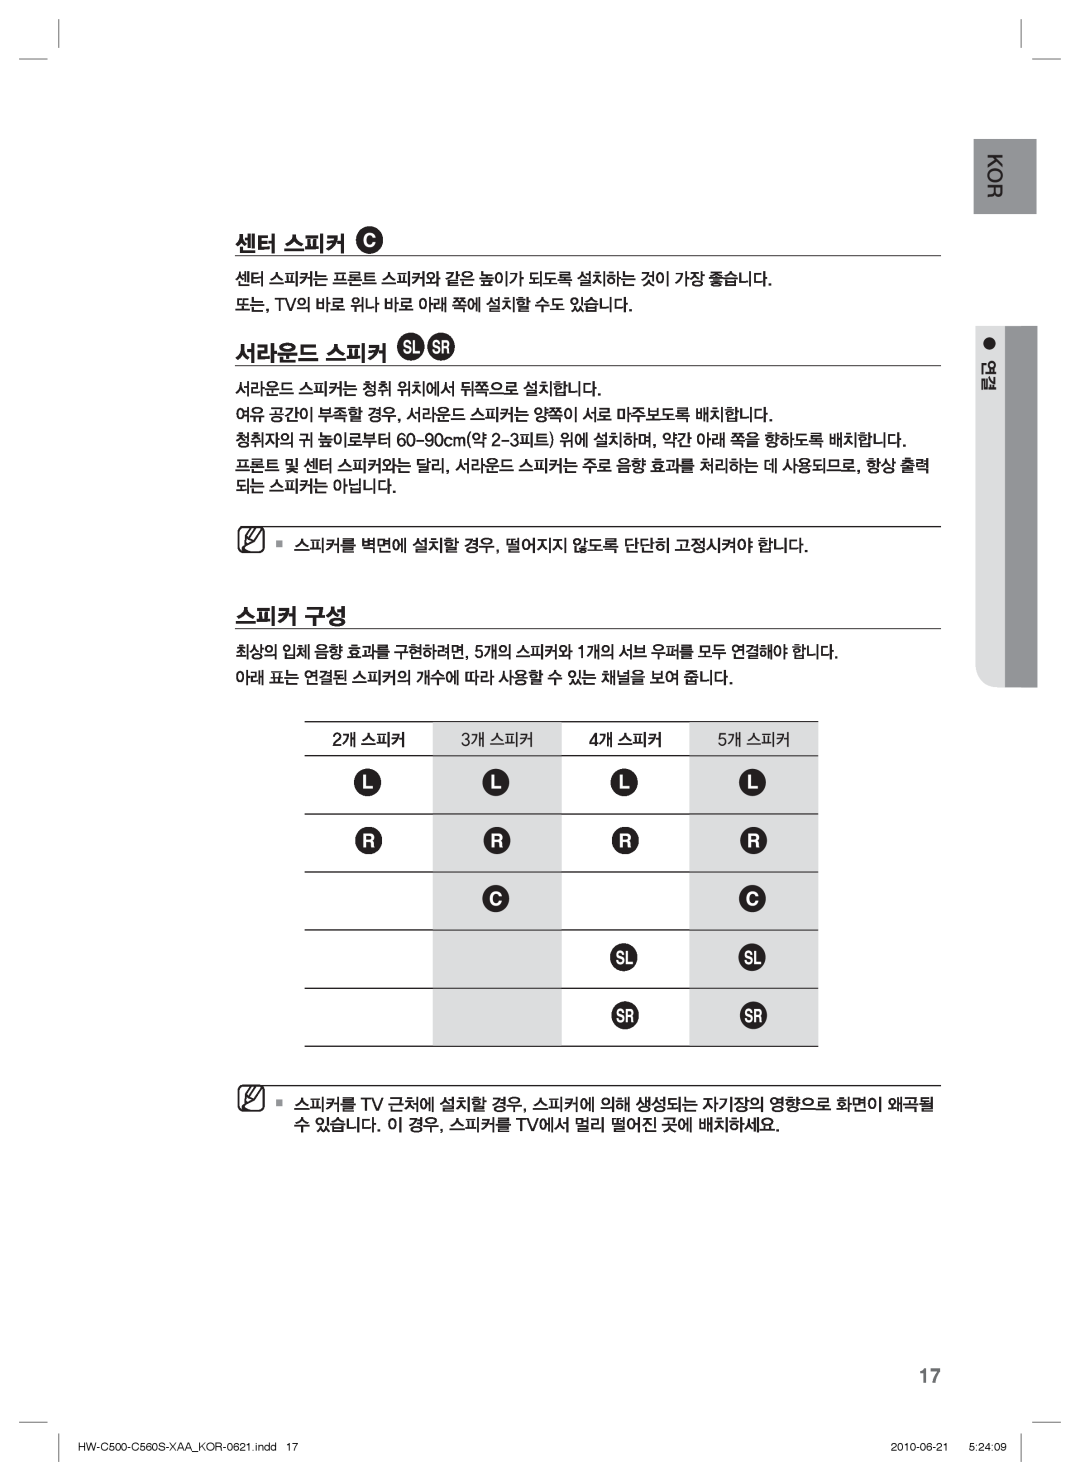 Samsung C560S manual 센터 스피커, 서라운드 스피커, 스피커 구성 